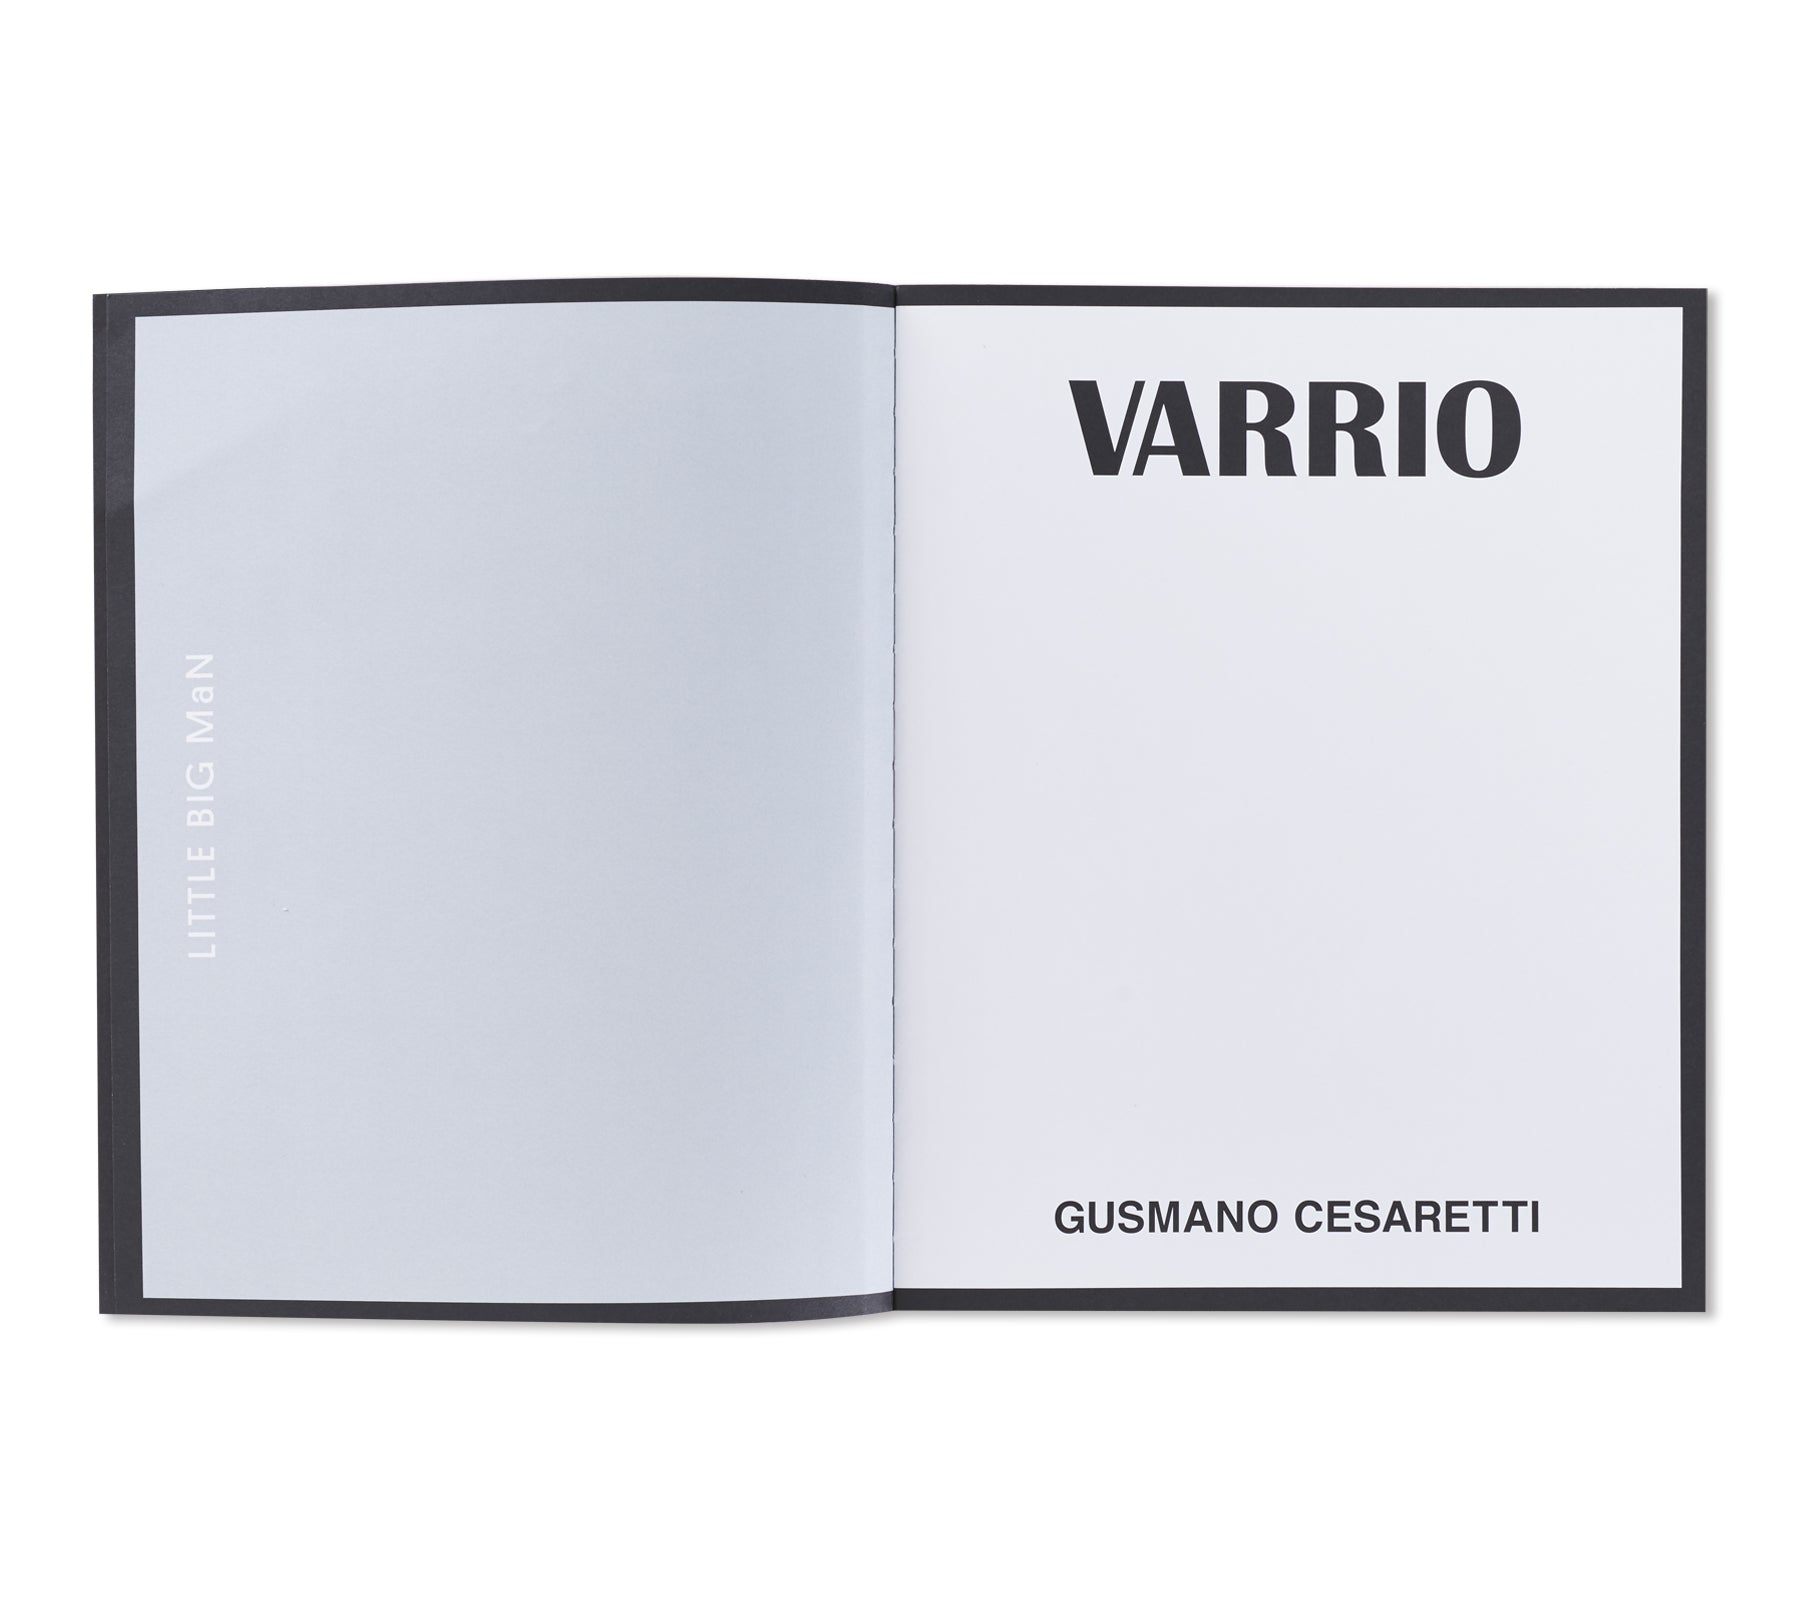 VARRIO by Gusmano Cesaretti